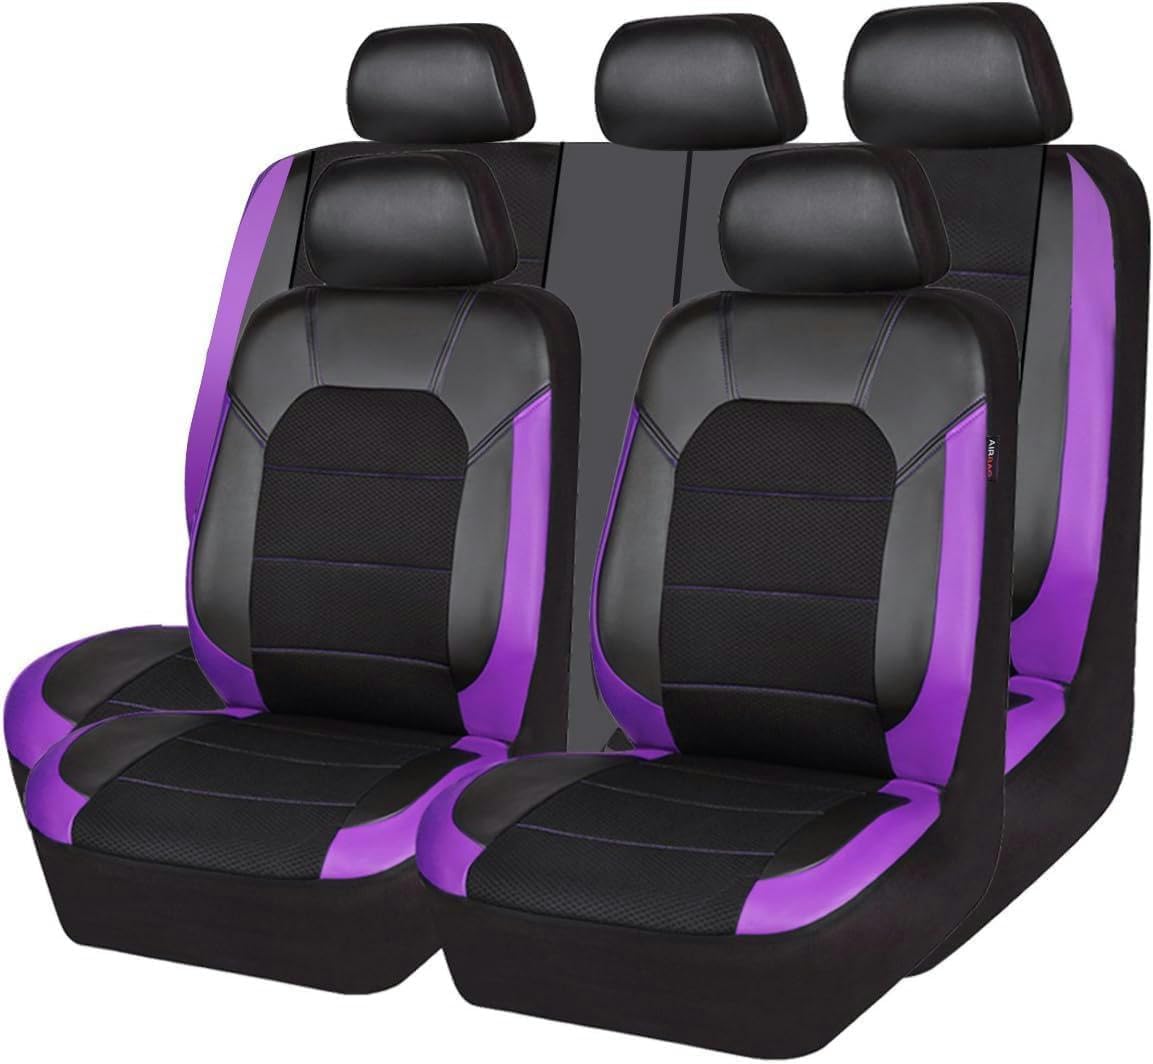 LEJOLI Sitzbezüge Auto Autositzbezüge Universal Set für MBZ M-Class ML 230 W163 ML 320 W163 ML 270 W163 ML 350 W163 Auto Zubehör,Schwarz Lila von LEJOLI